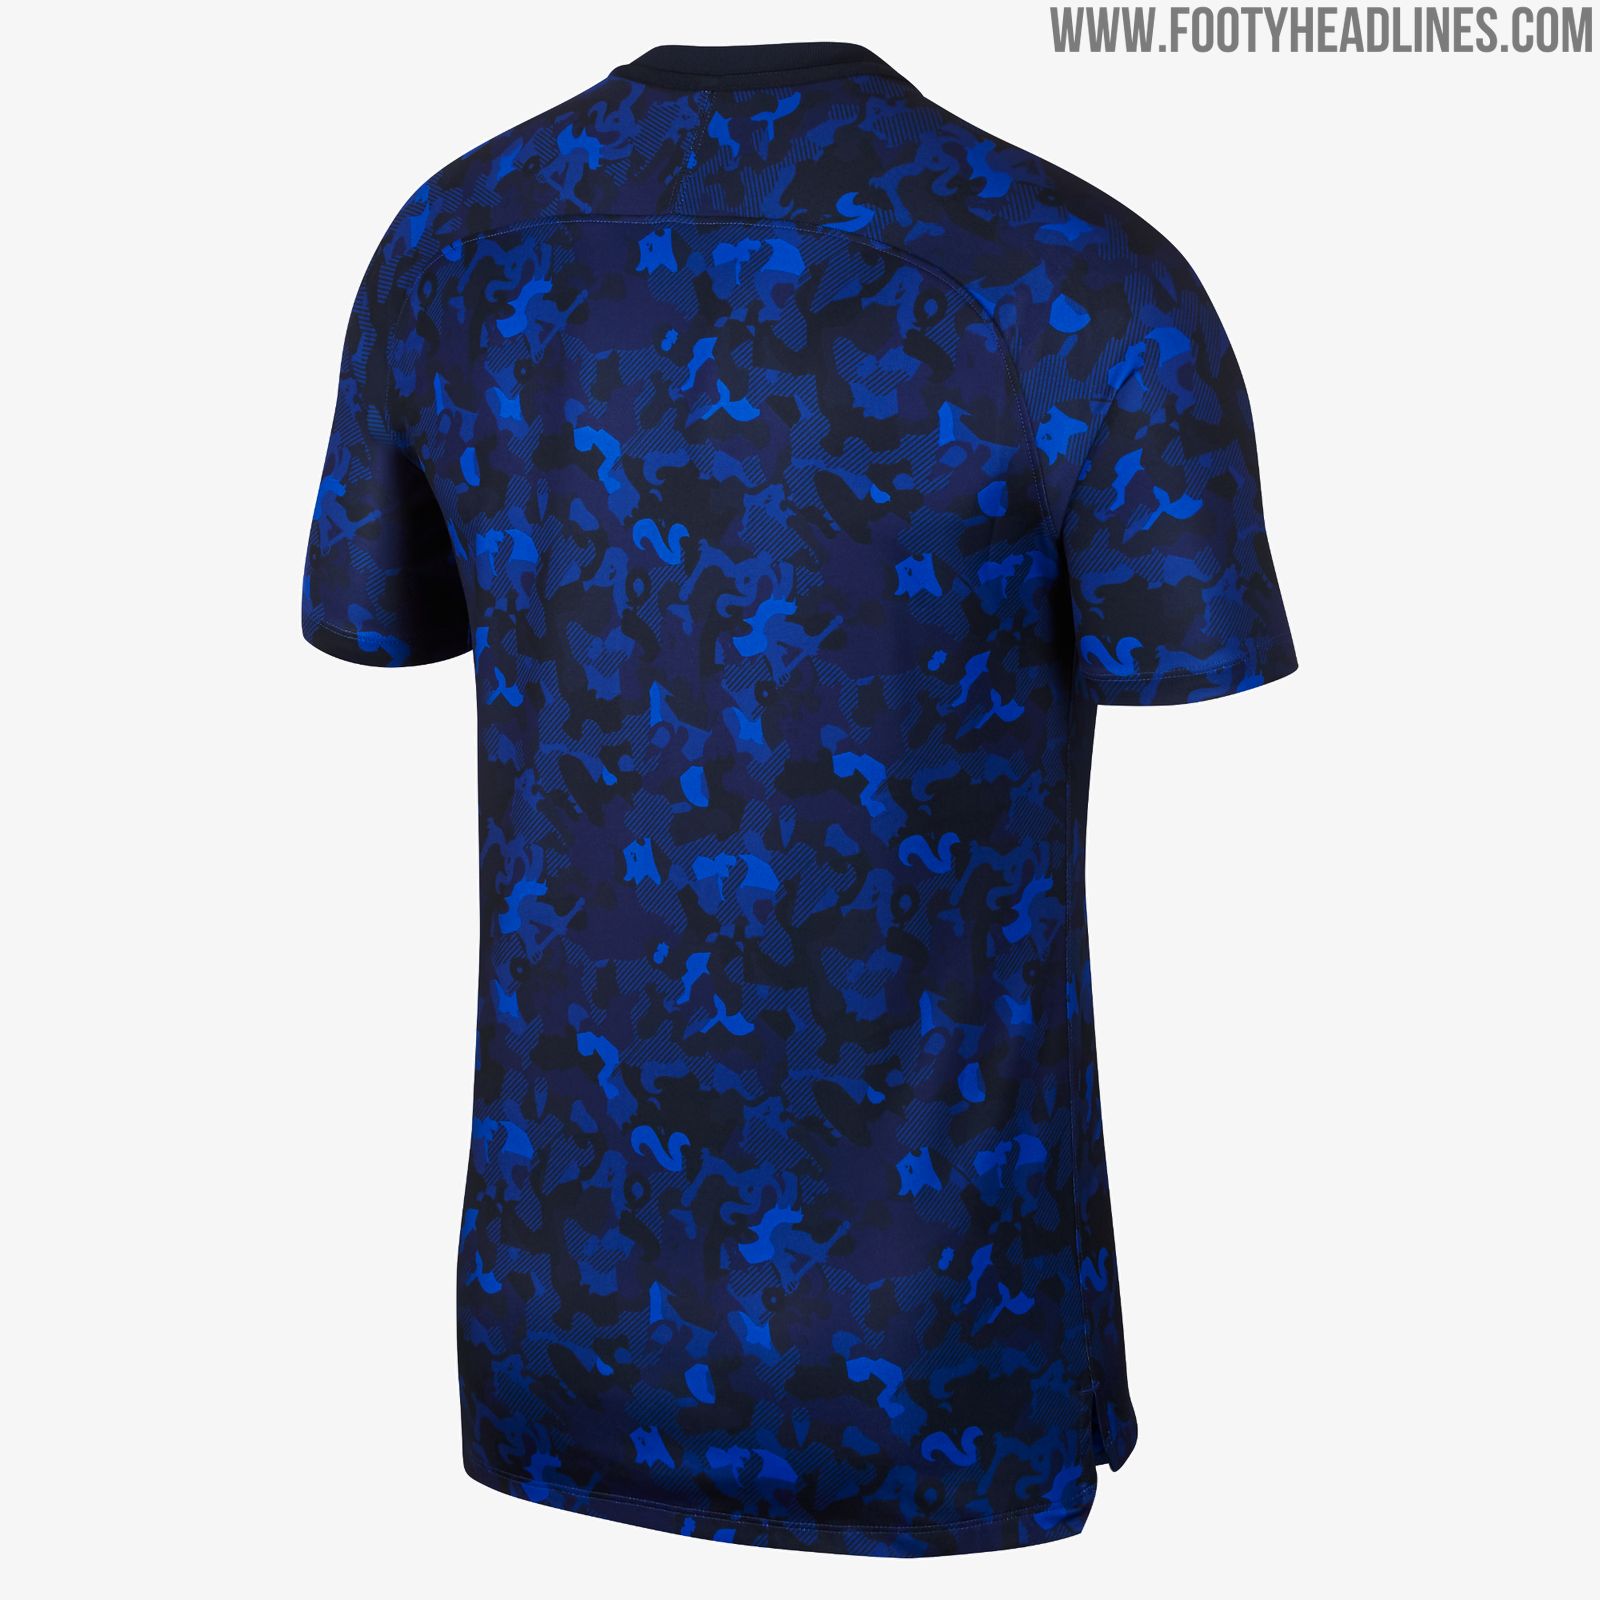 Nike Chelsea 2019 Camouflage Pre-Match Jersey Released - Footy Headlines